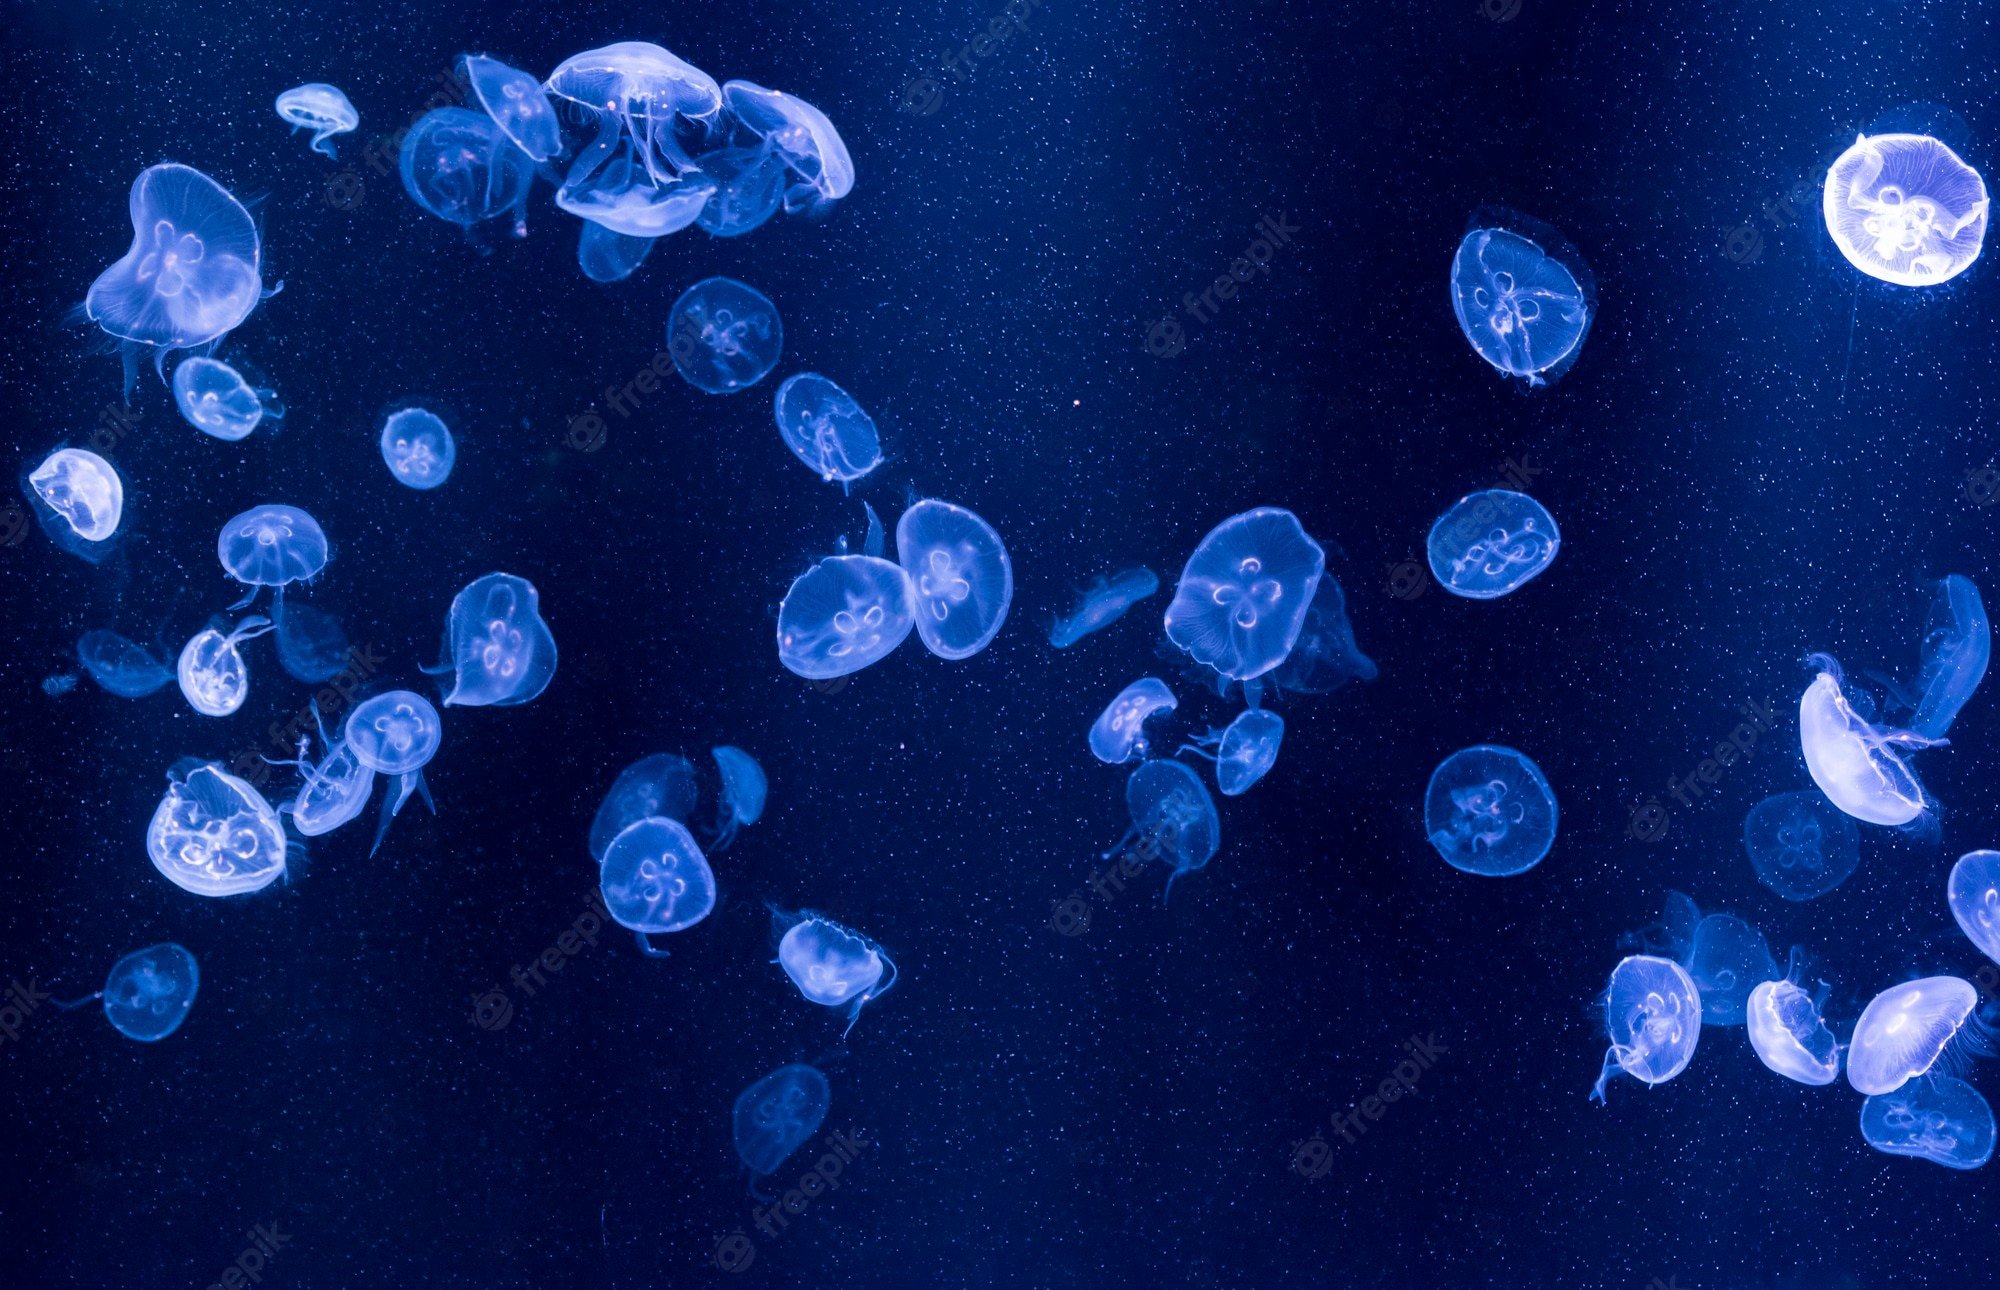 Moon Jellyfish Image. Free Vectors, & PSD